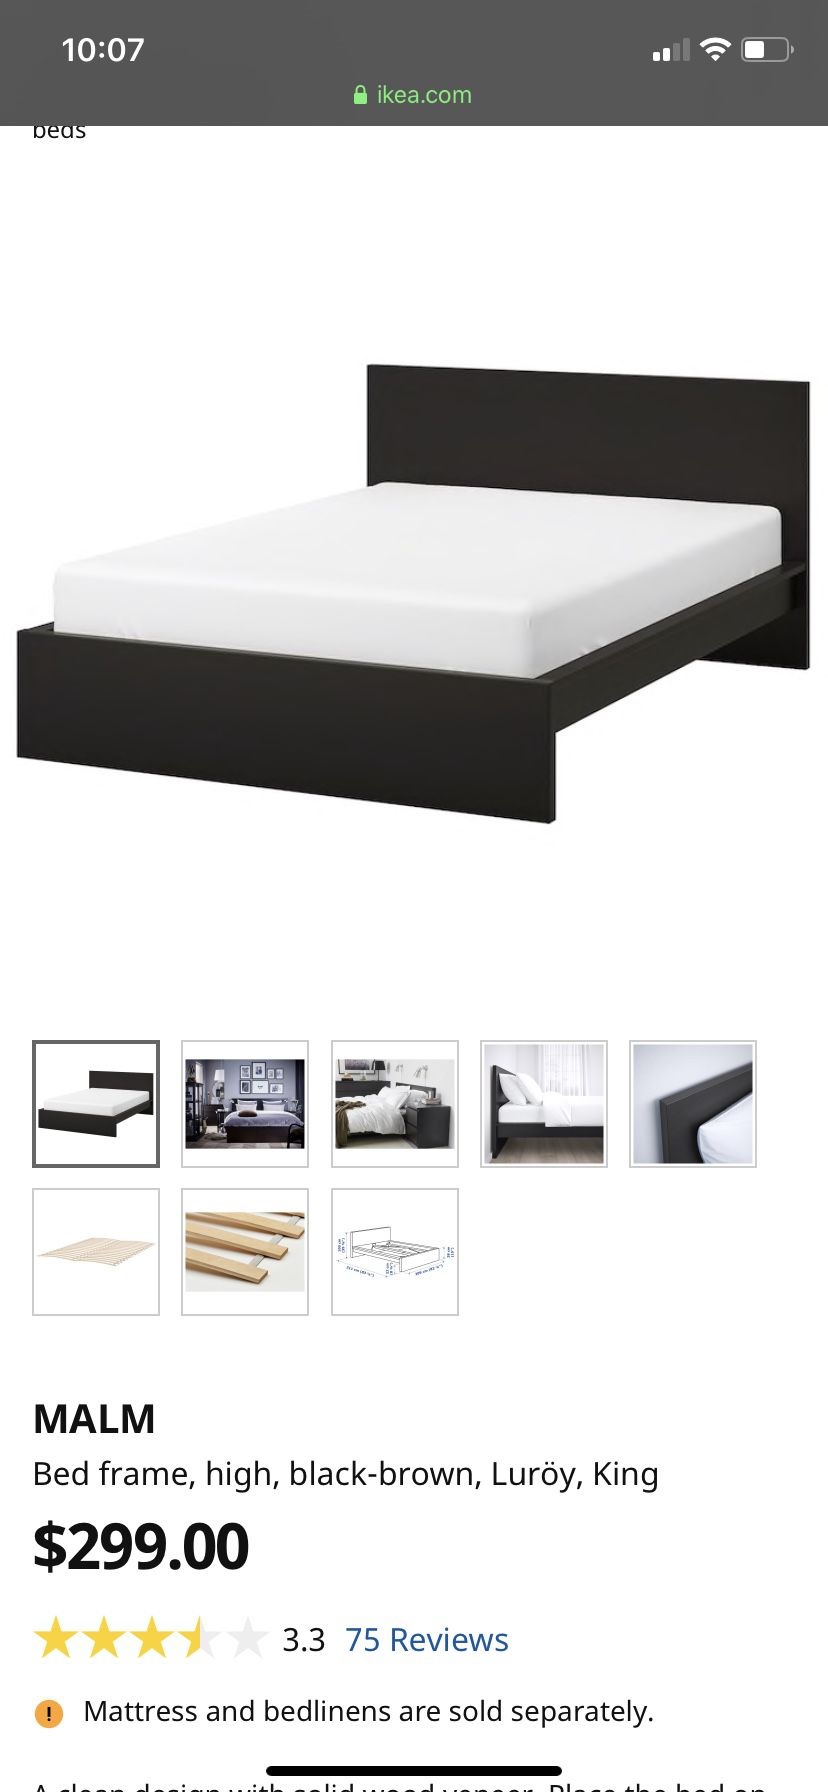 Bed frame, black-brown, King size + the king mattress